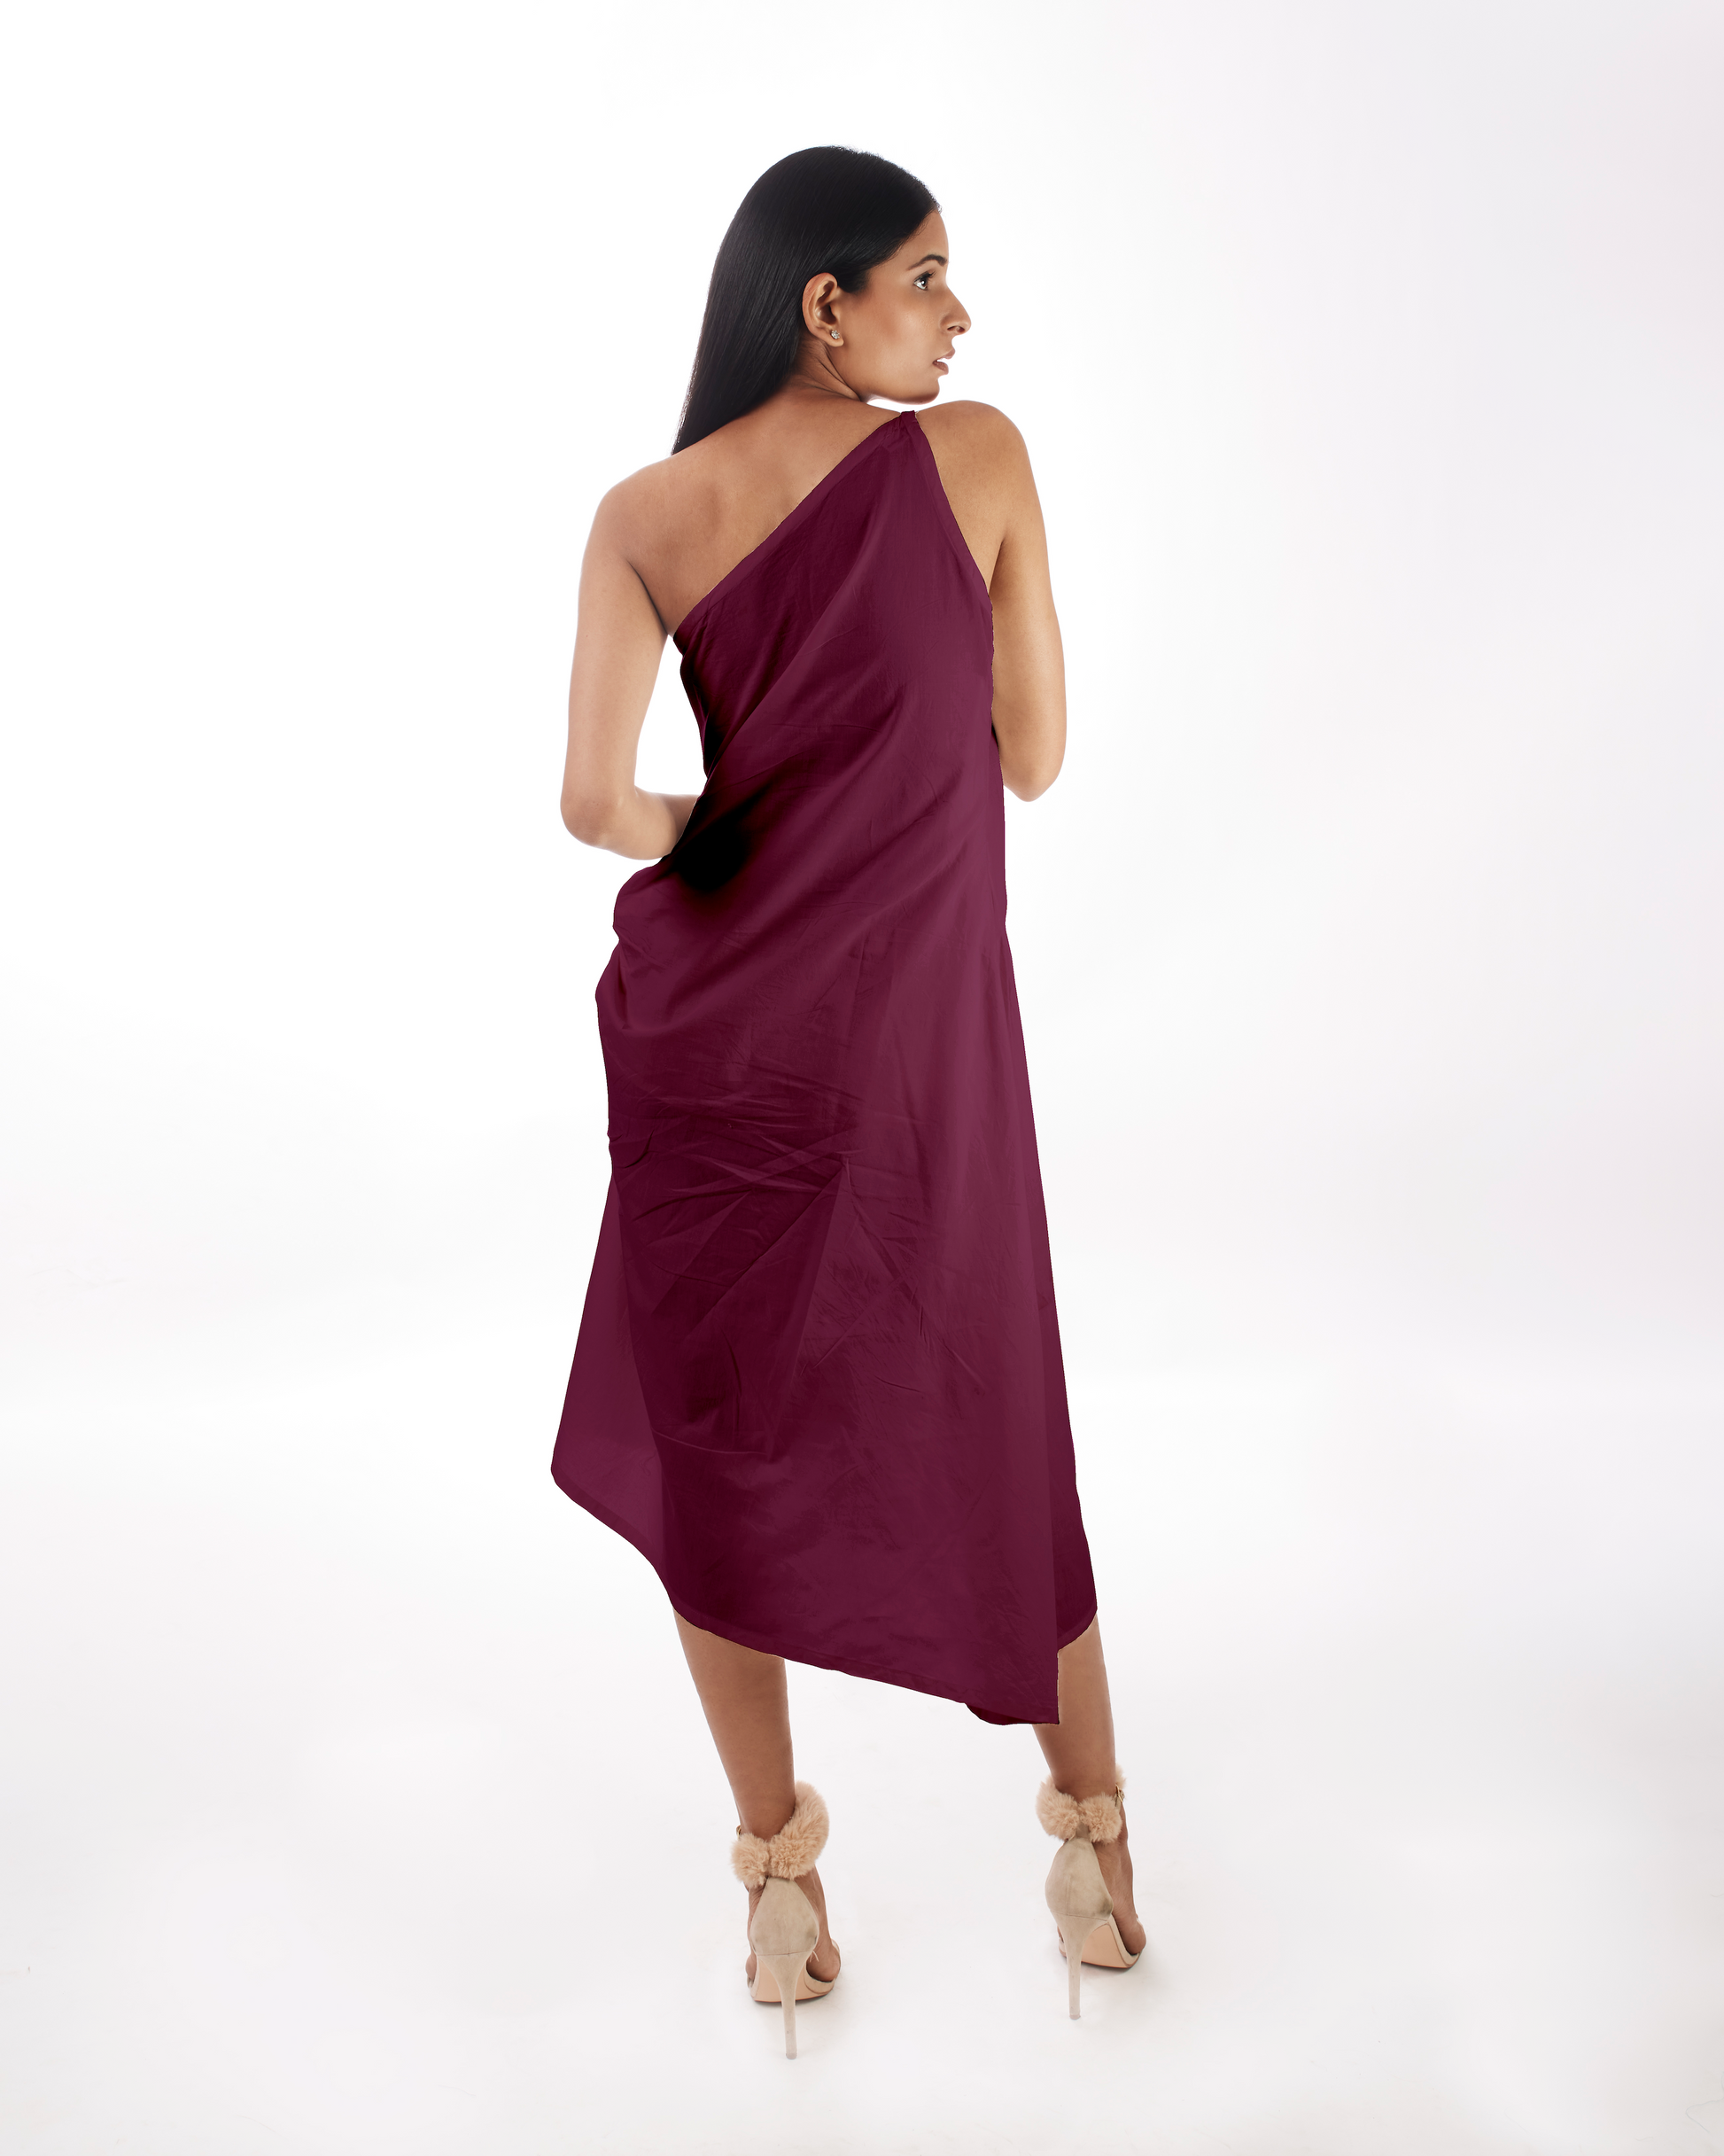 Plum One Shoulder Dress at Kamakhyaa by Kamakhyaa. This item is 100% pure cotton, Evening Wear, FB ADS JUNE, KKYSS, Natural, One Shoulder Dresses, Purple, Regular Fit, Solids, Summer Sutra, Womenswear